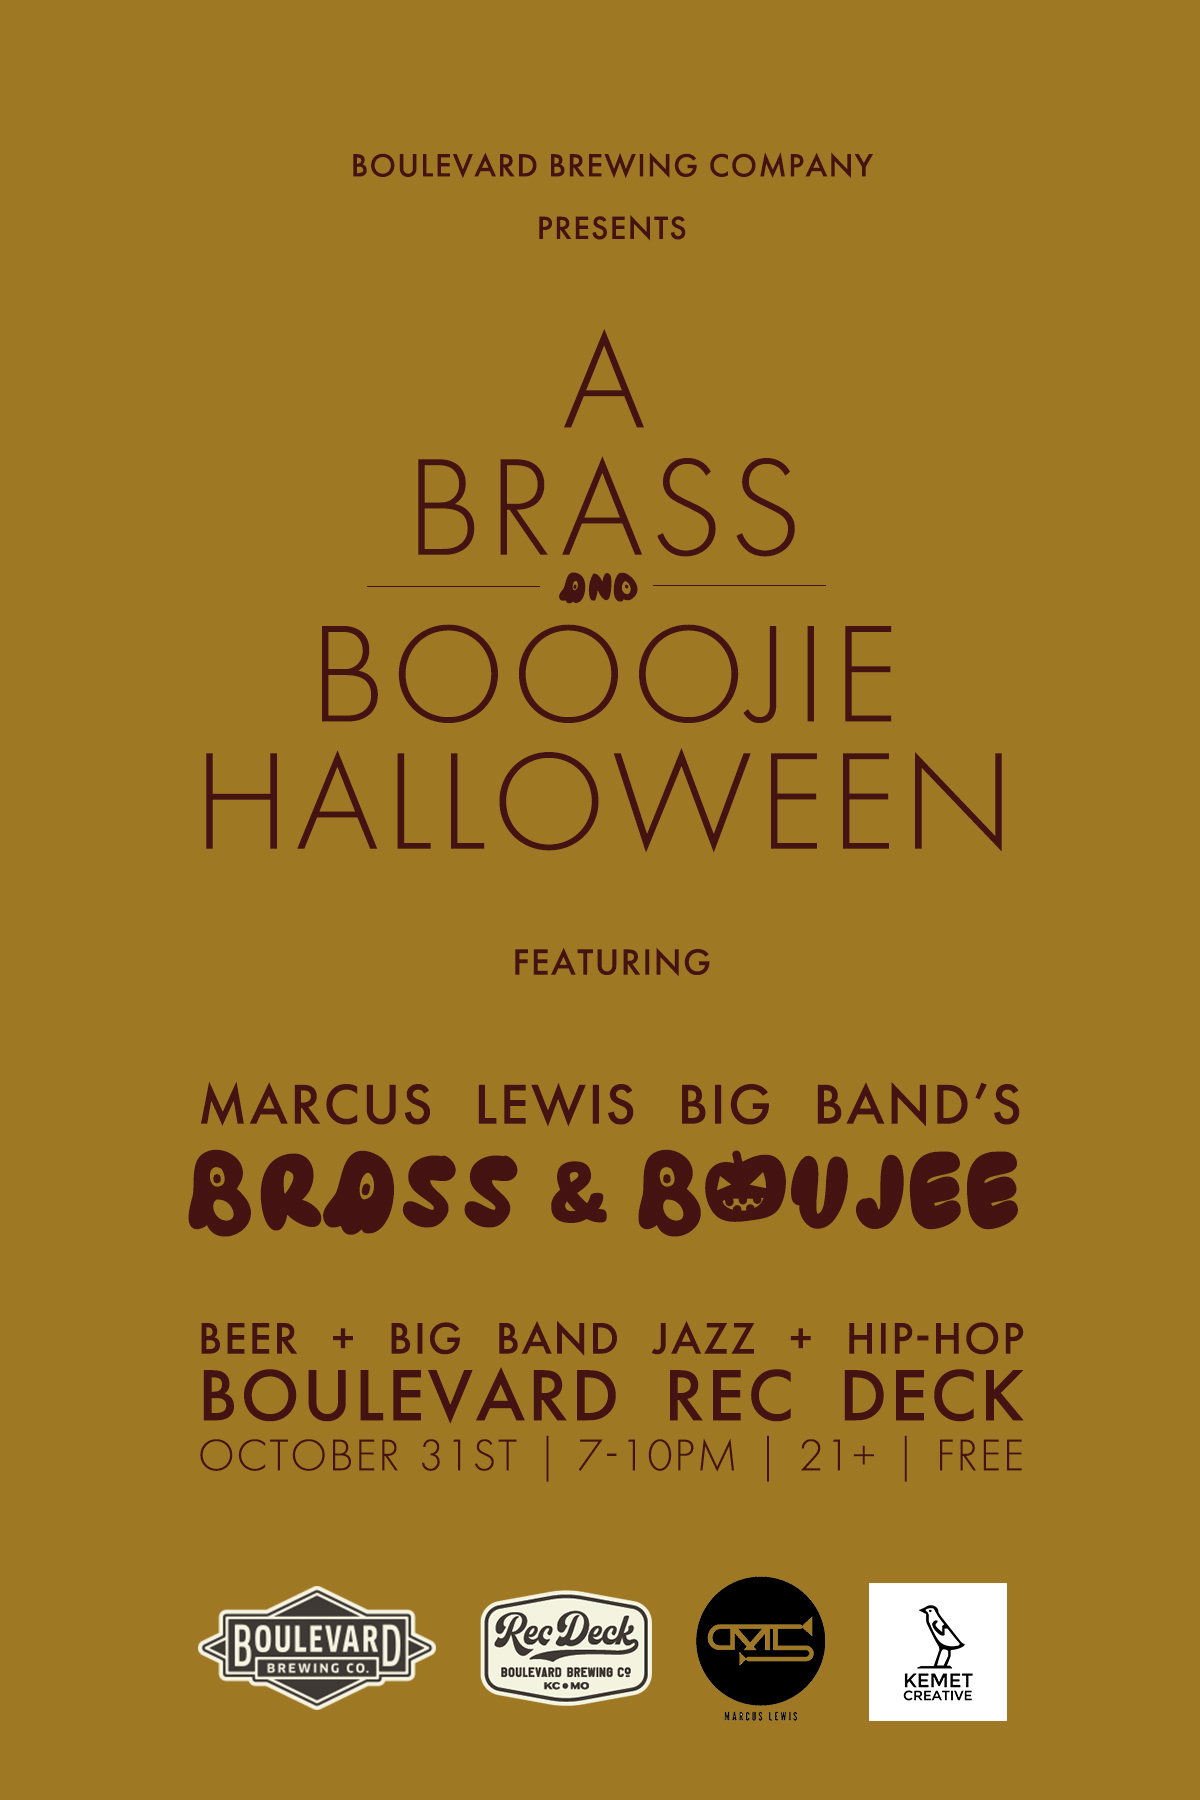 Brass and Booojie Halloween